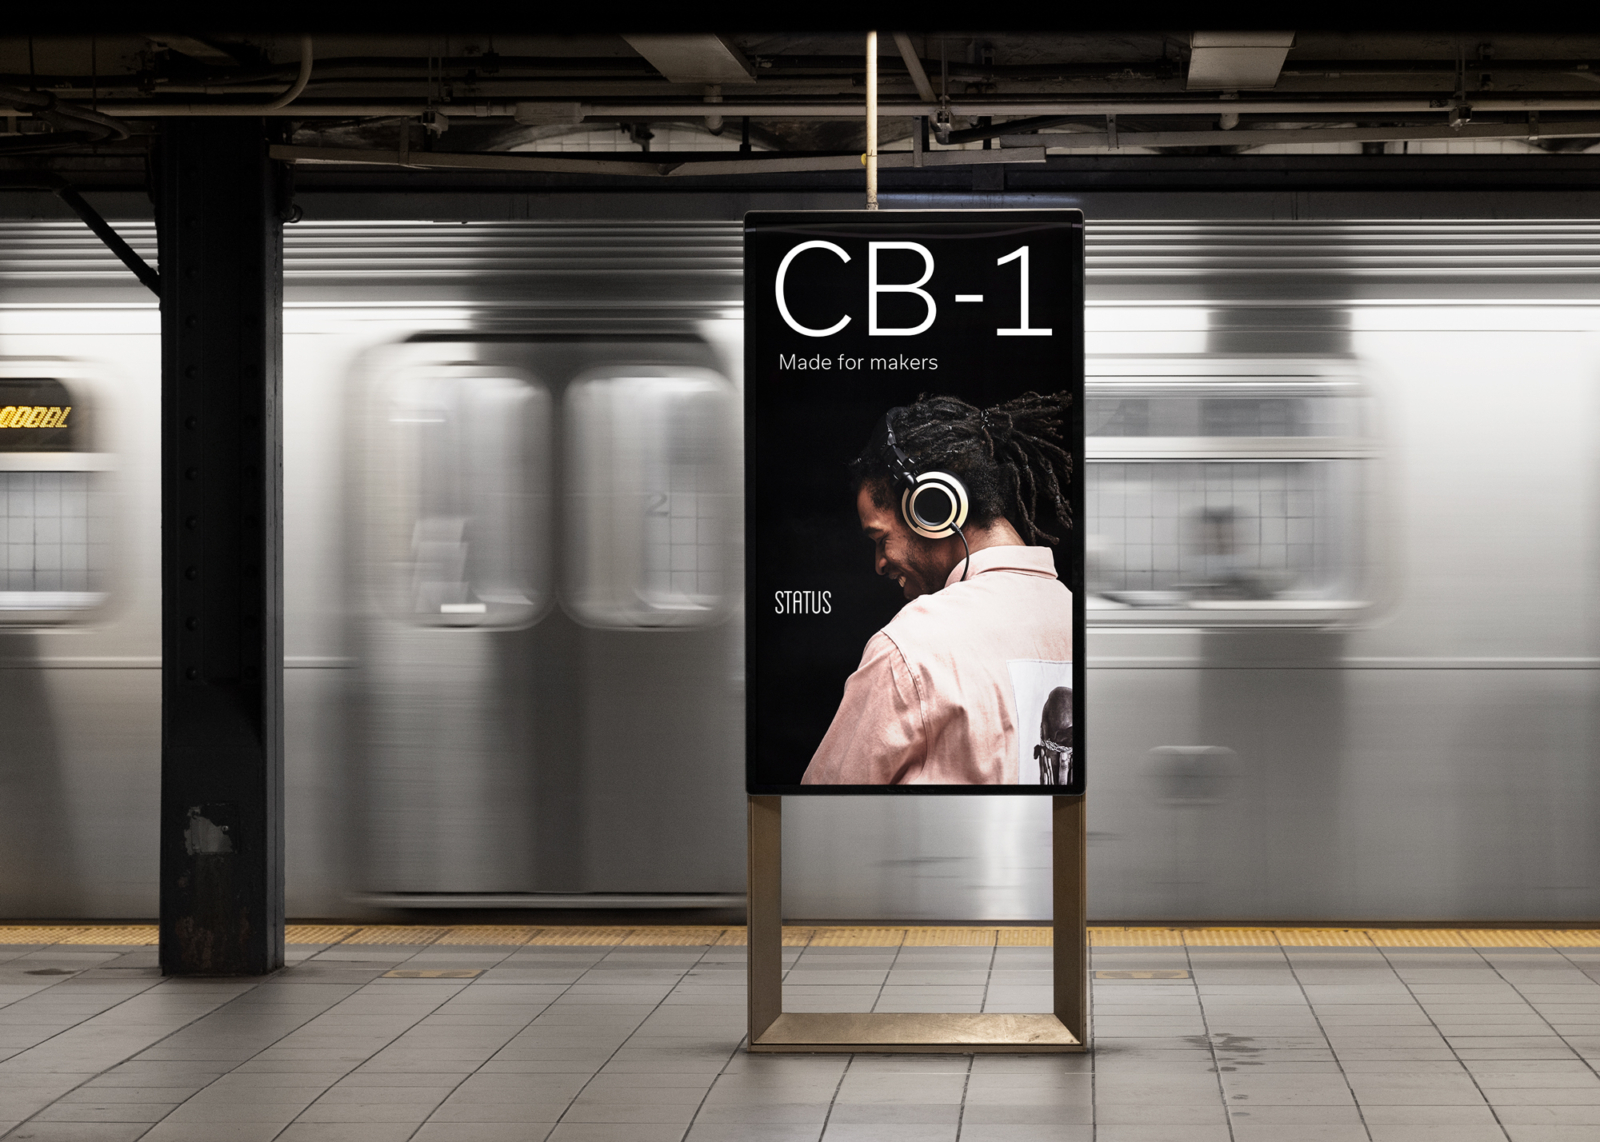 Subway poster advertising the Status CB-1 headphones.